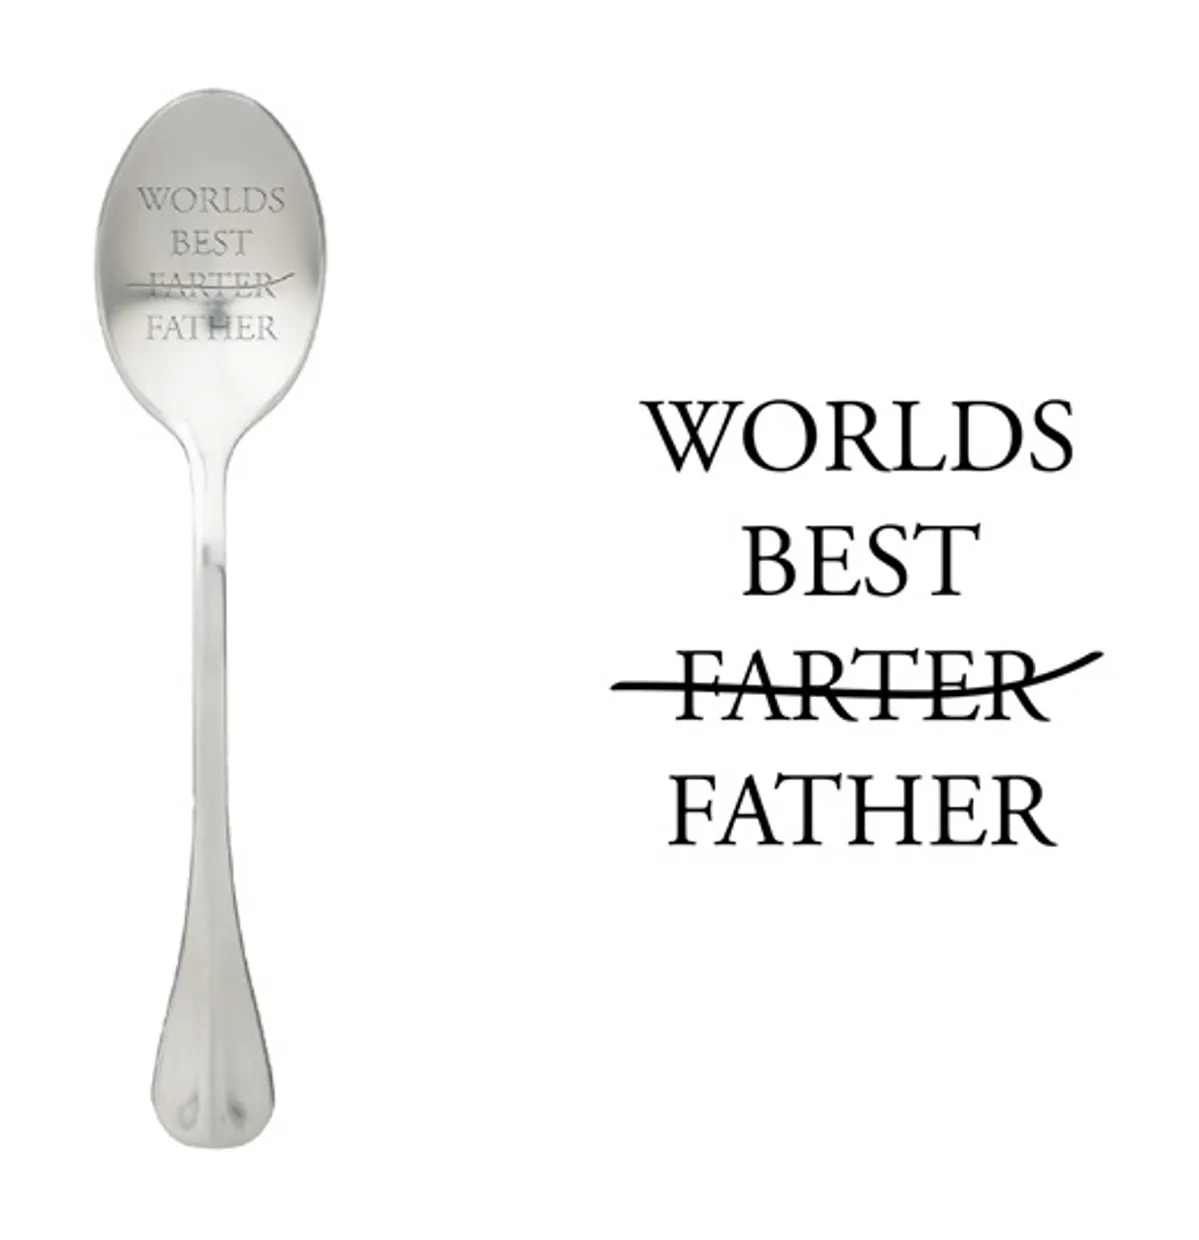 Lepel Worlds best farter father